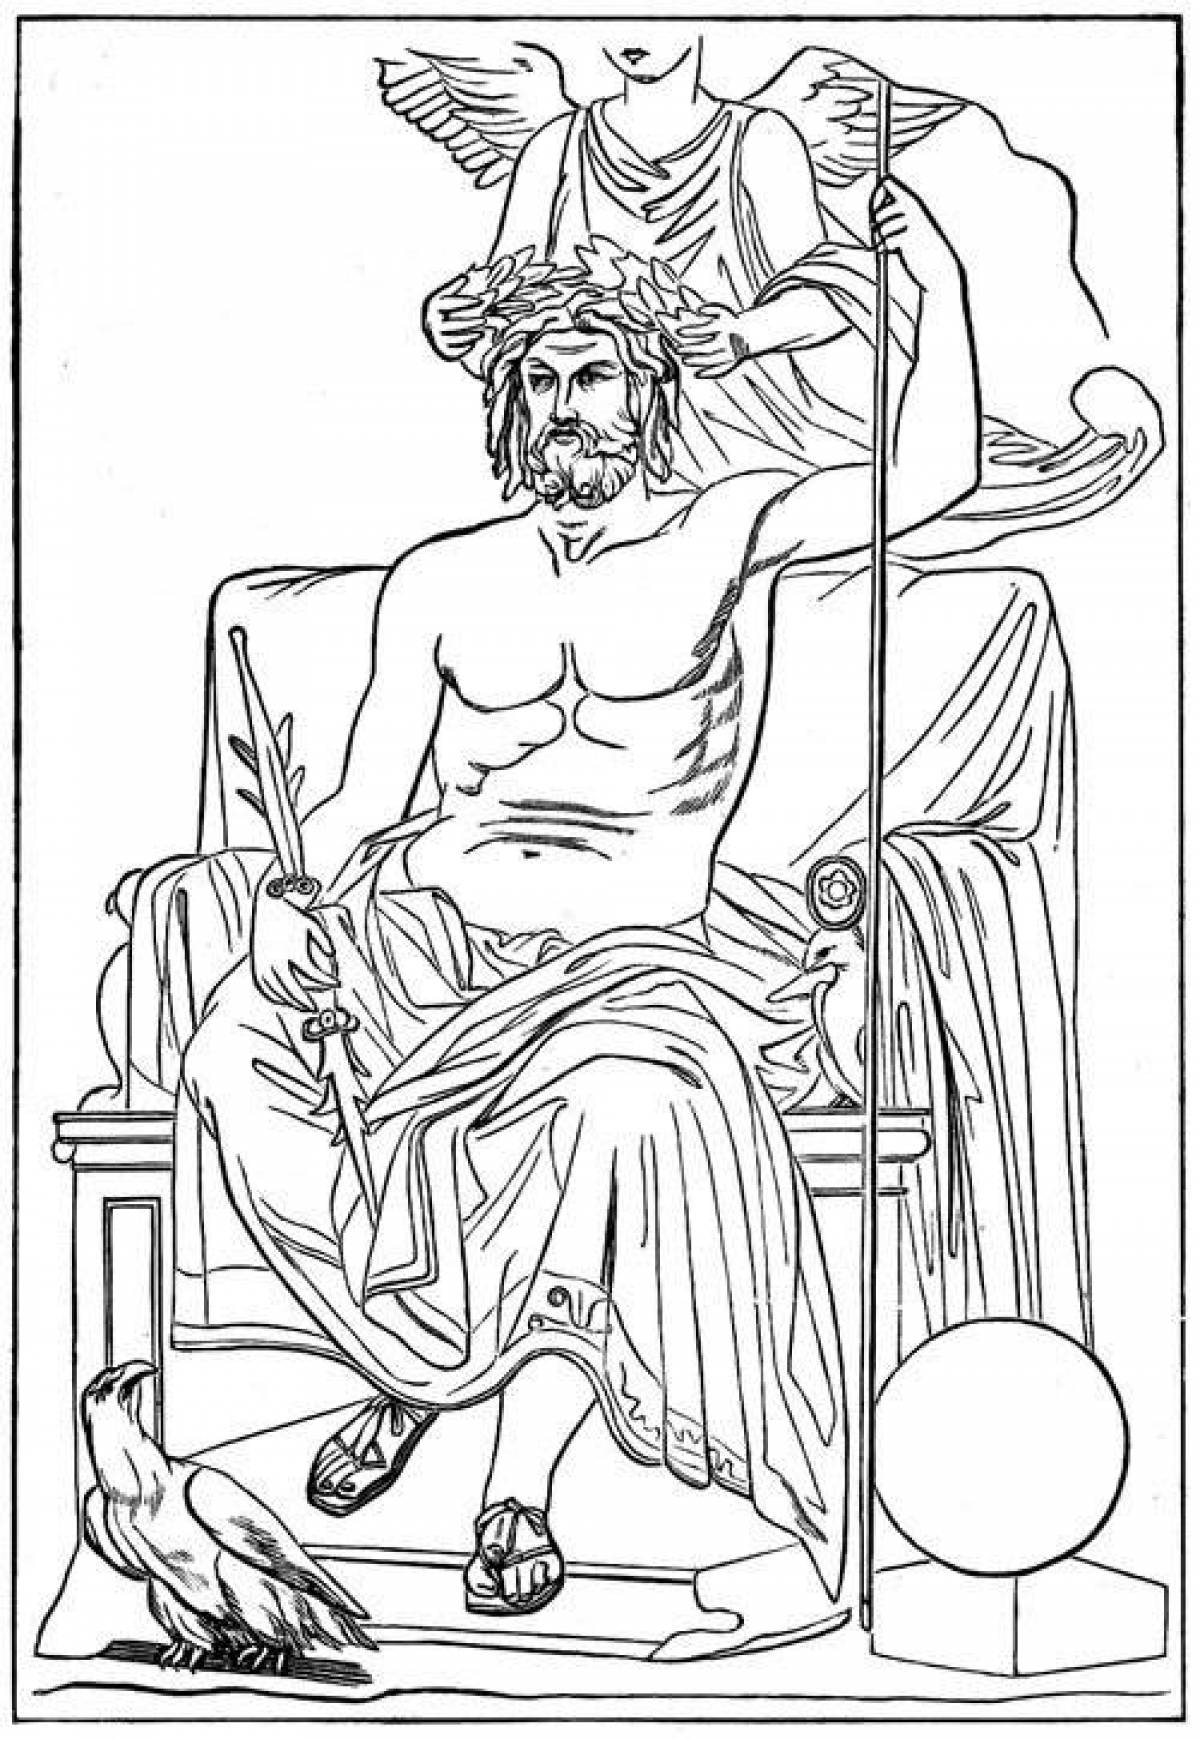 Glittering Zeus coloring book